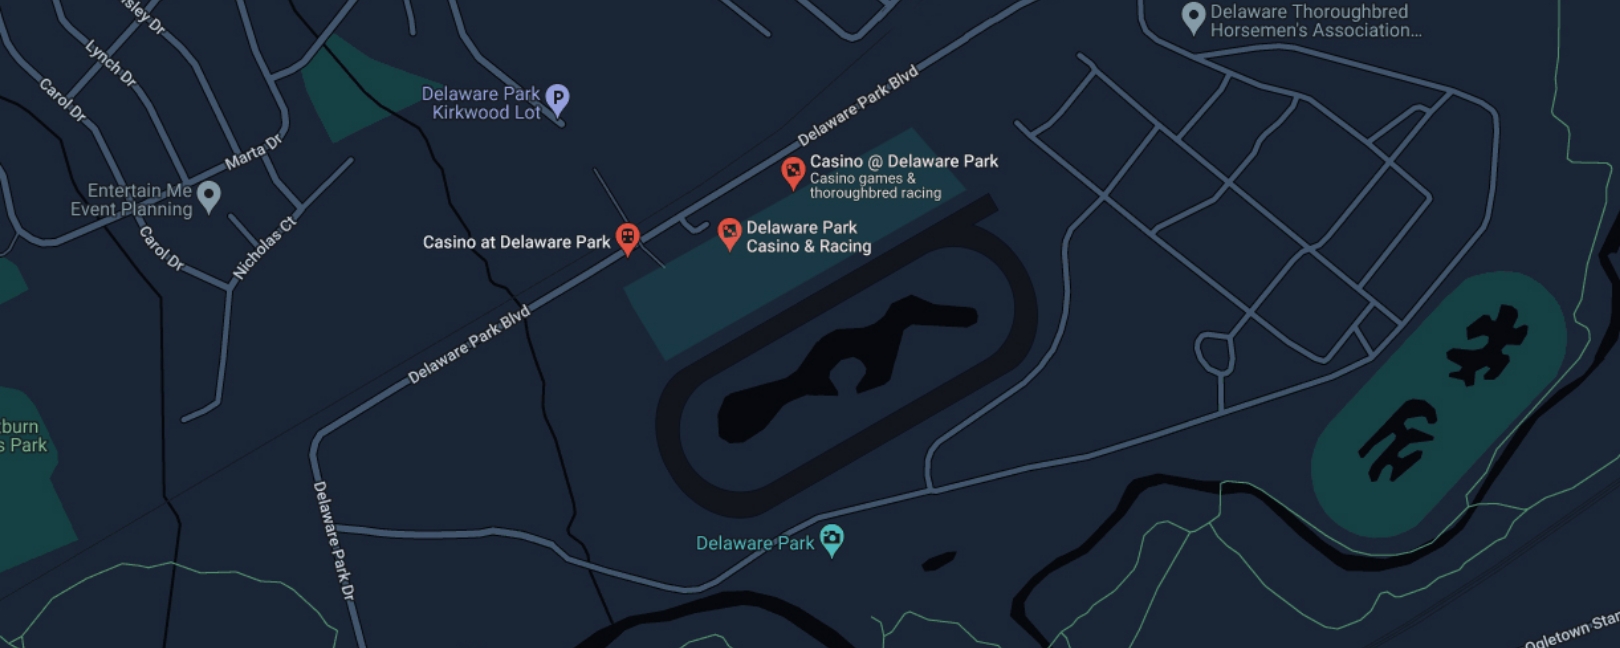 Delaware Park - See on Google Maps